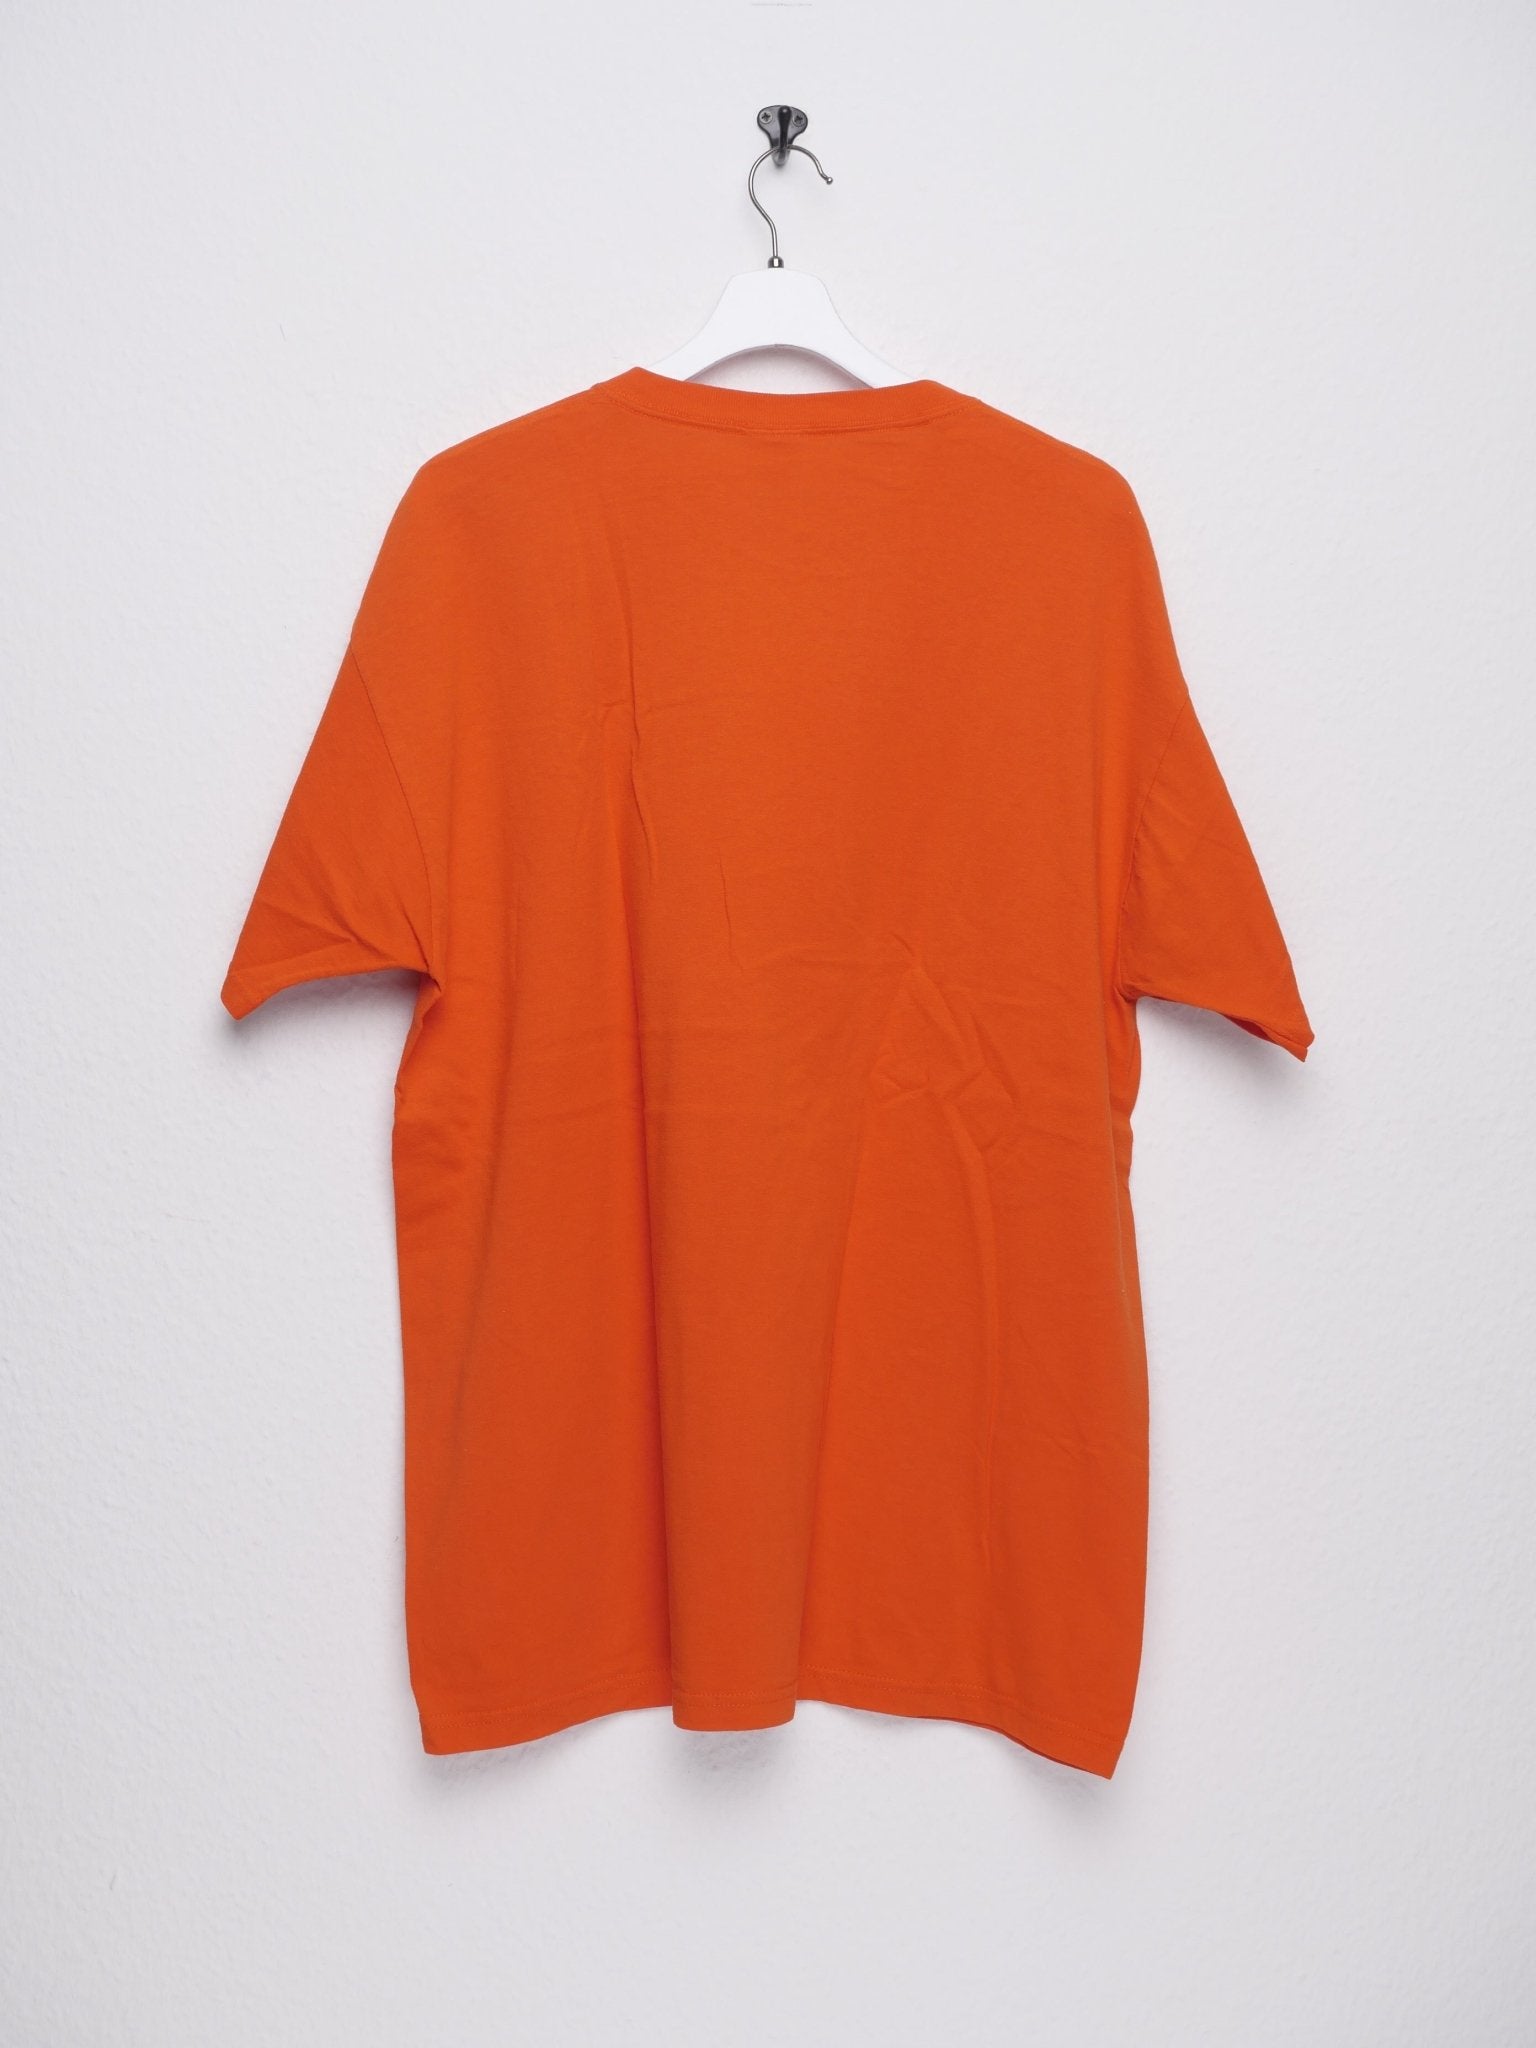 printed Willow Brook orange Shirt - Peeces